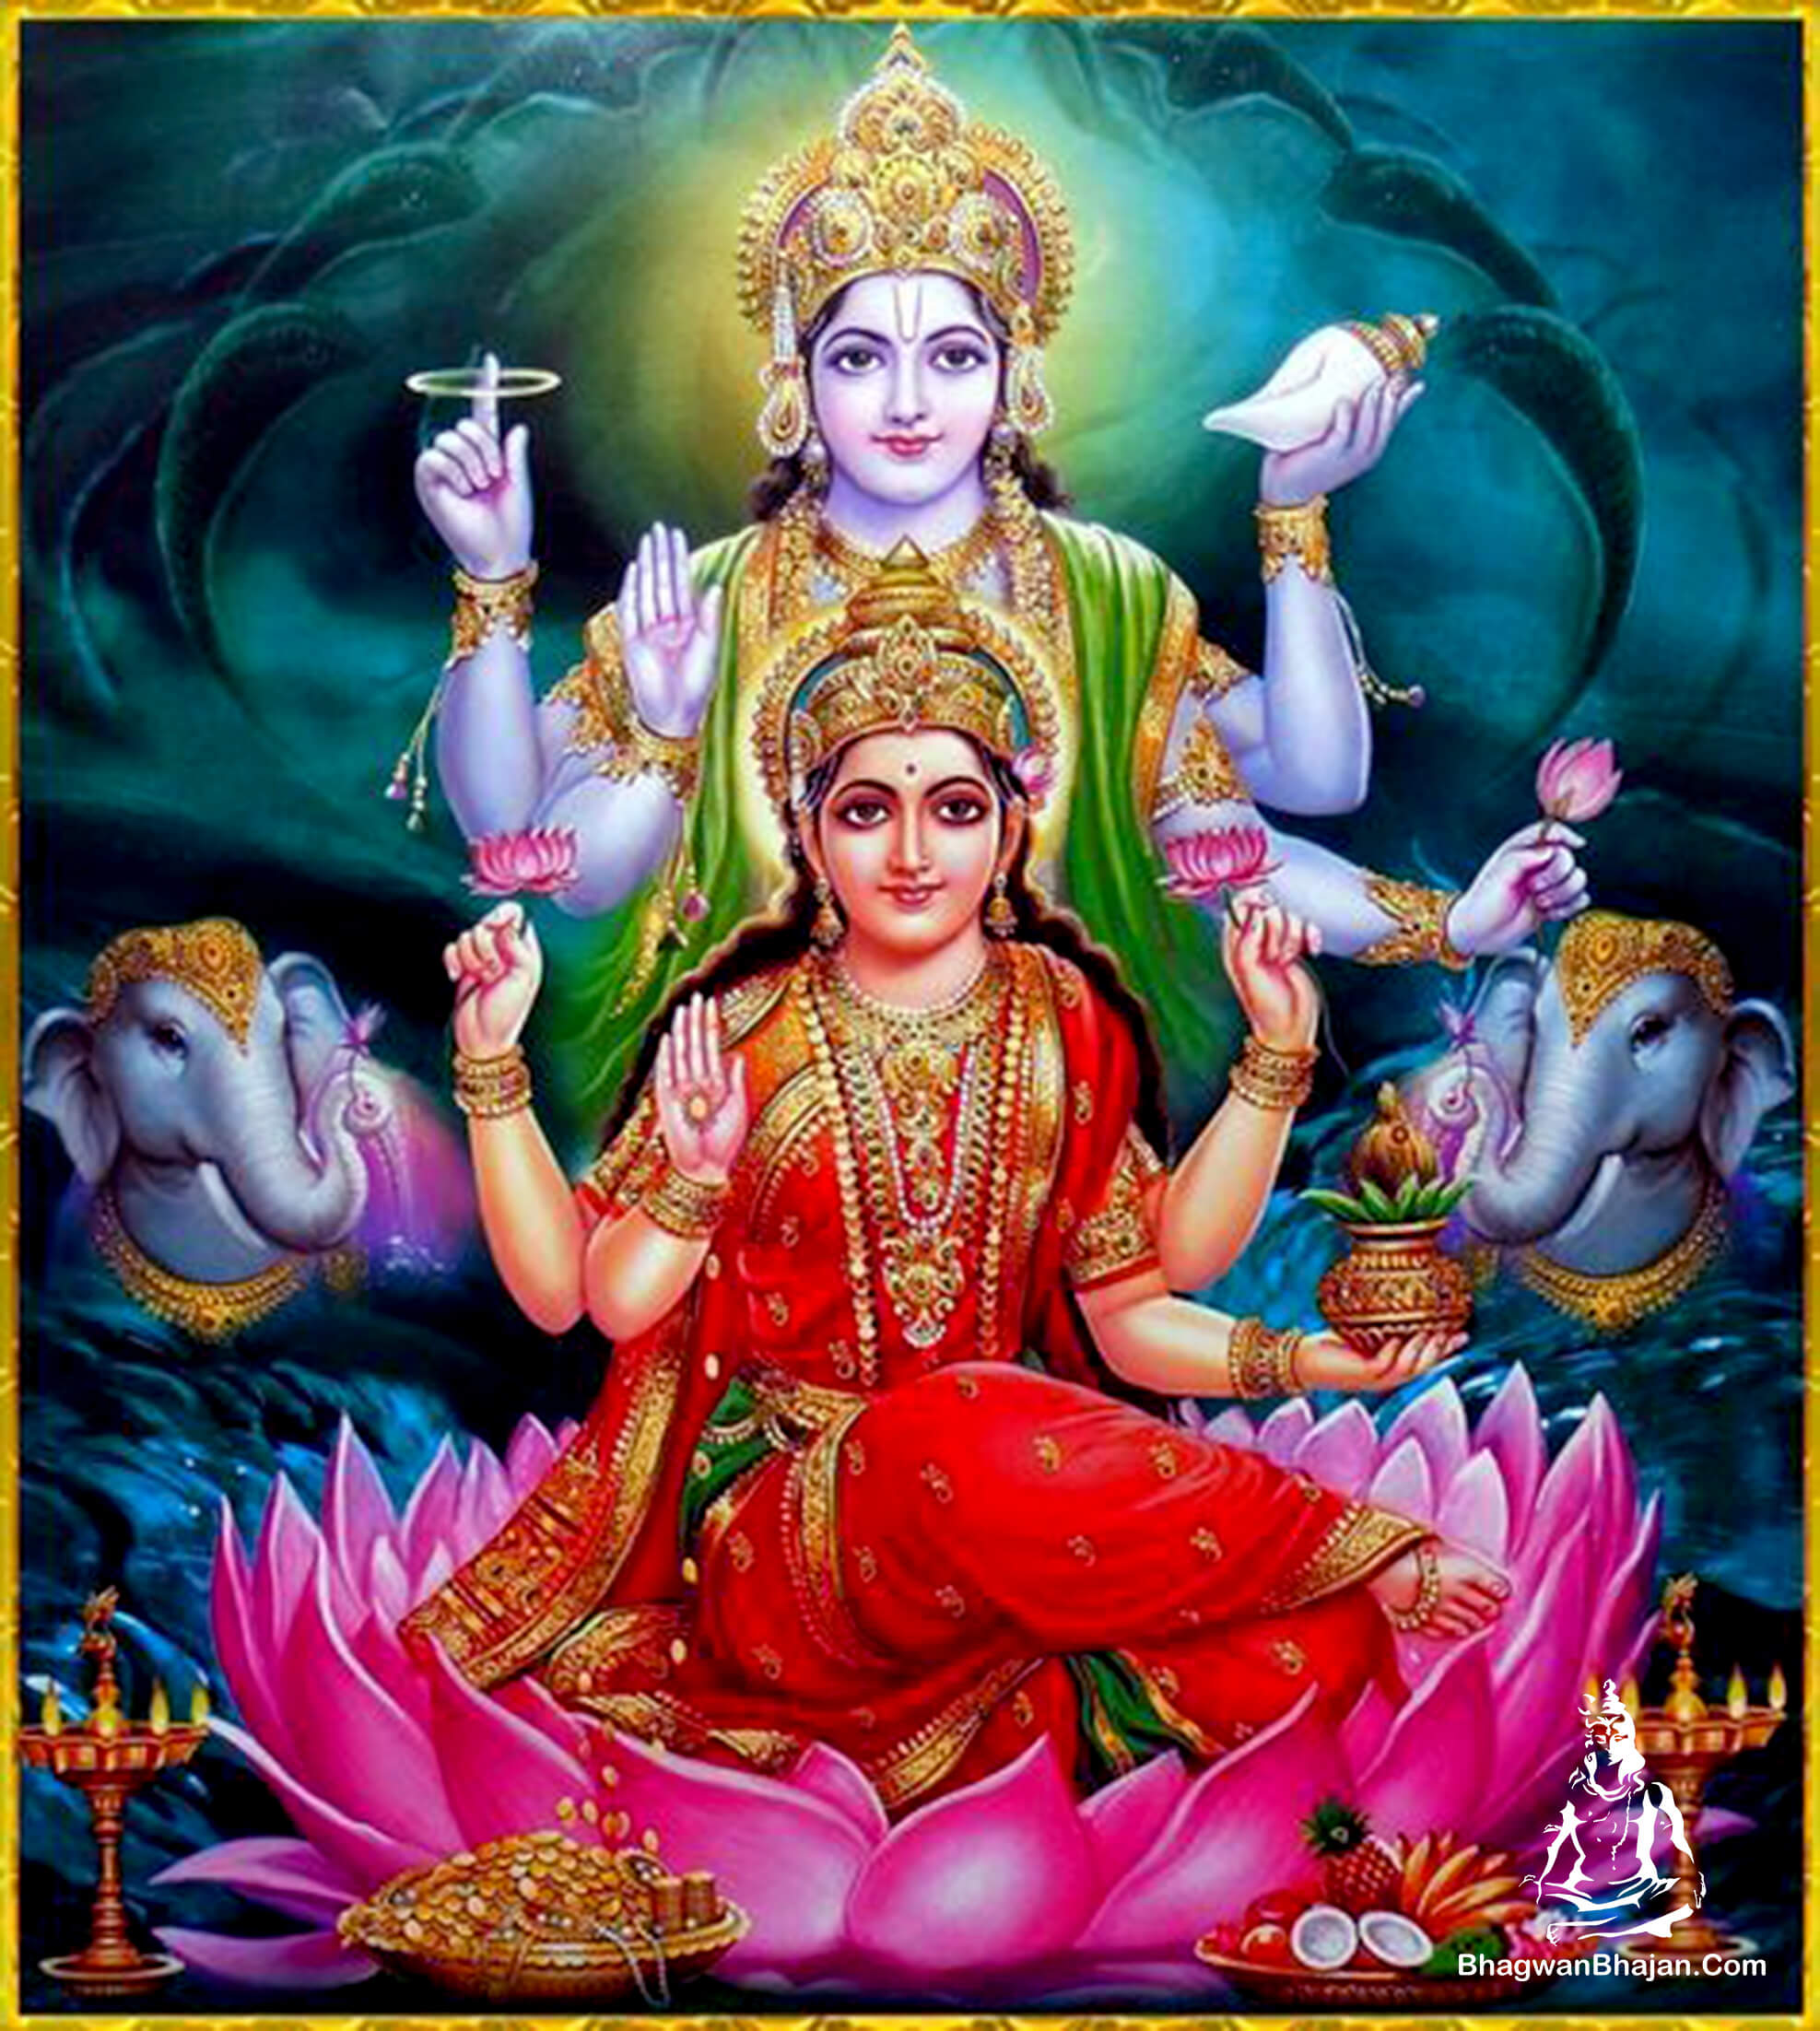 Download Free HD Wallpapers & Images of Bhagwan Vishnu ...